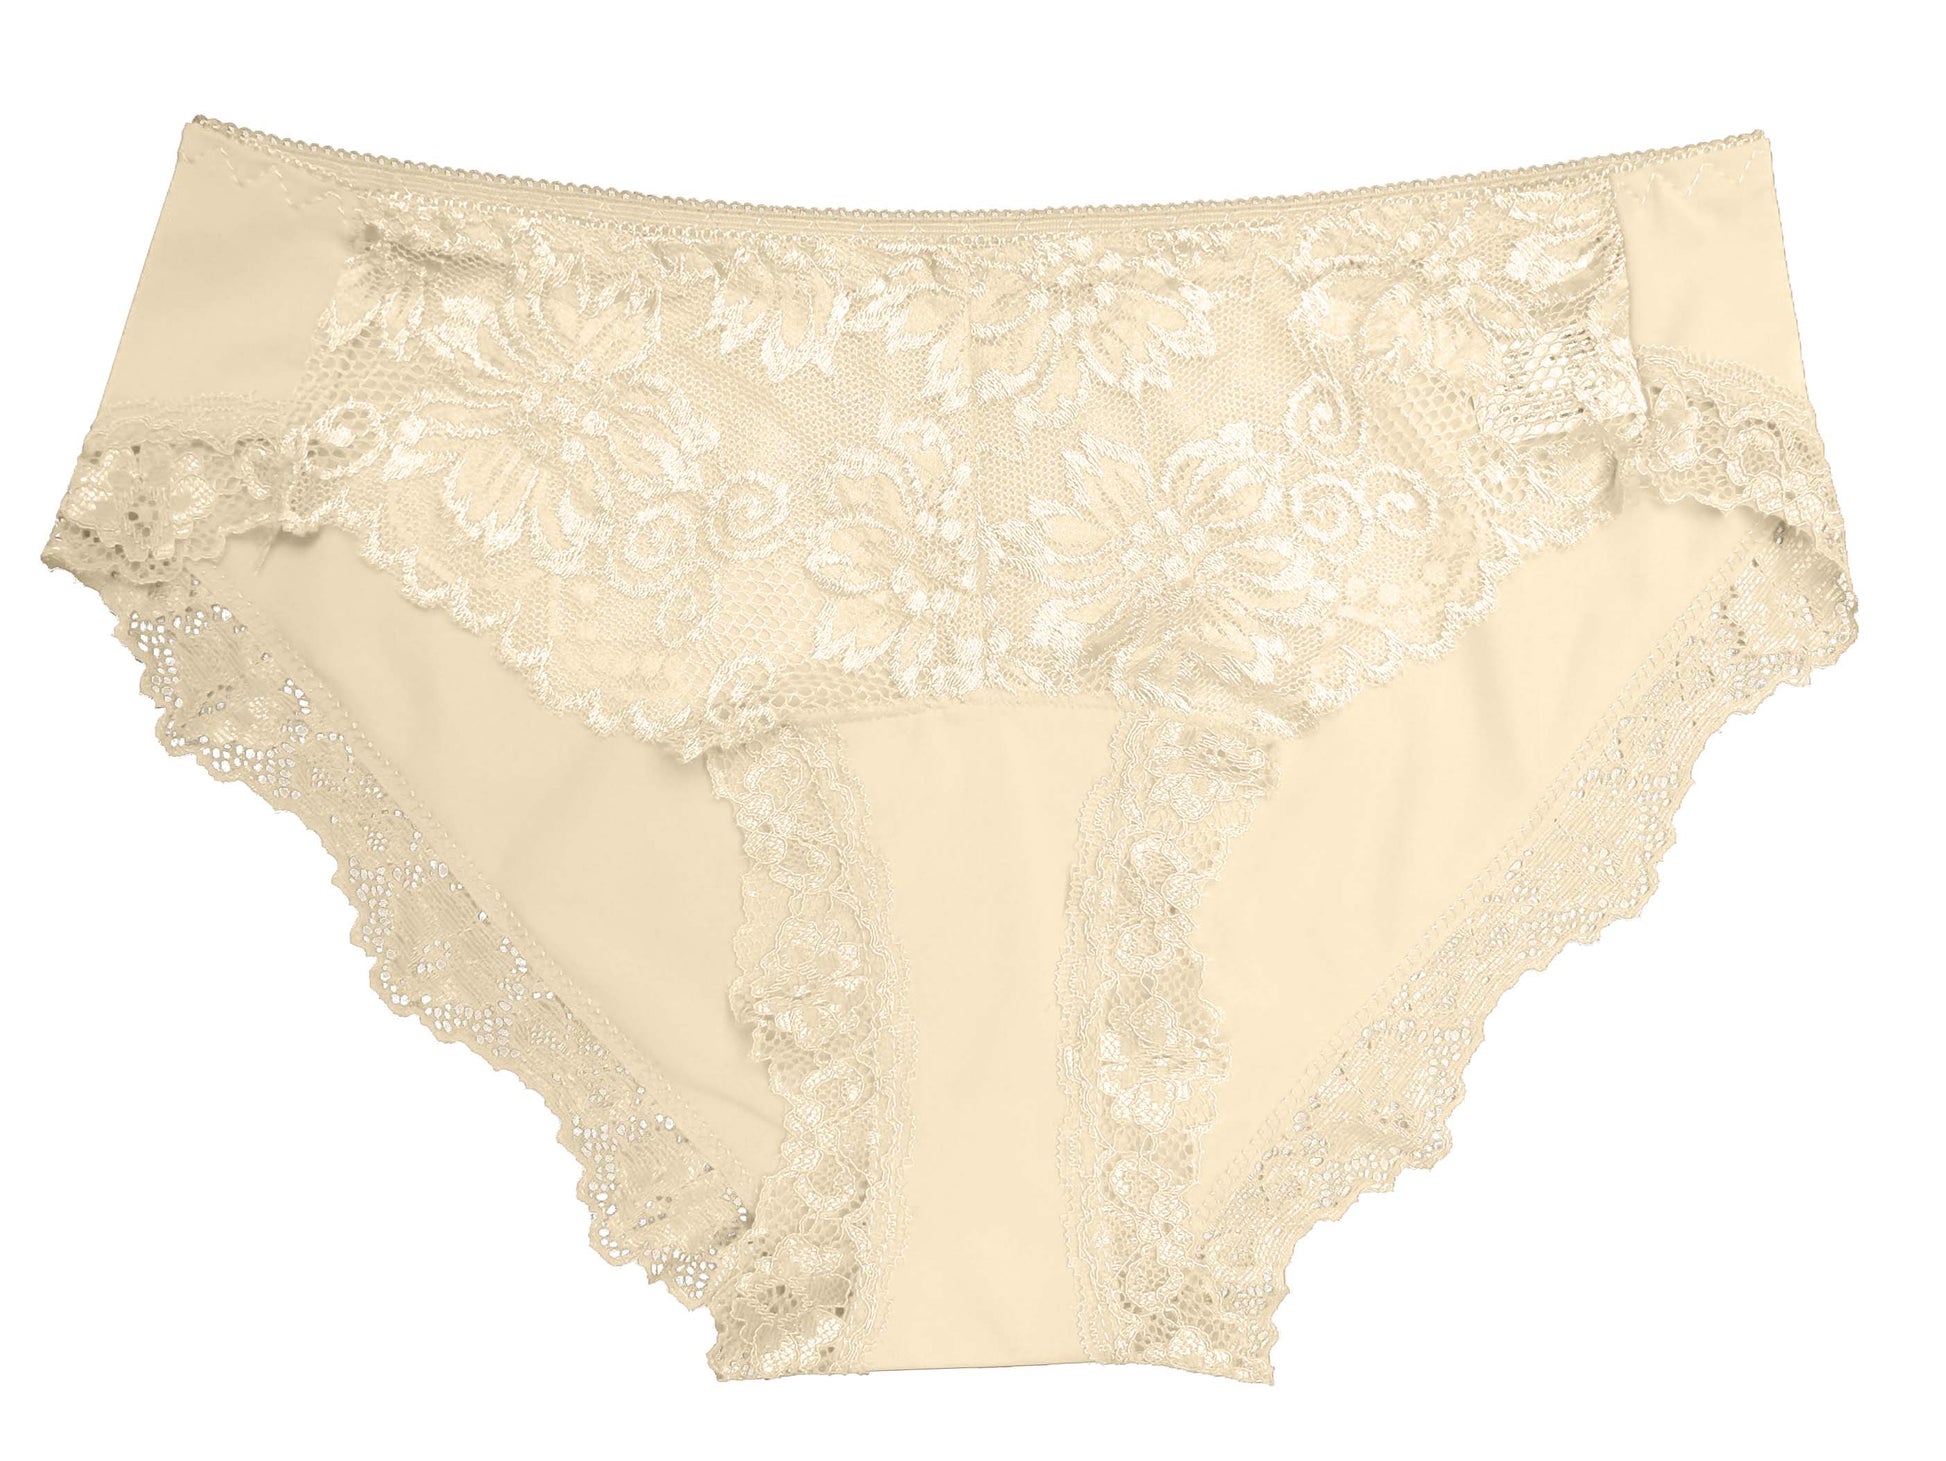 Trifolium 3/6 Pack Lace Panties Bikini Underwear Ladies Sexy Low Rise –  Emma Co UK Ltd